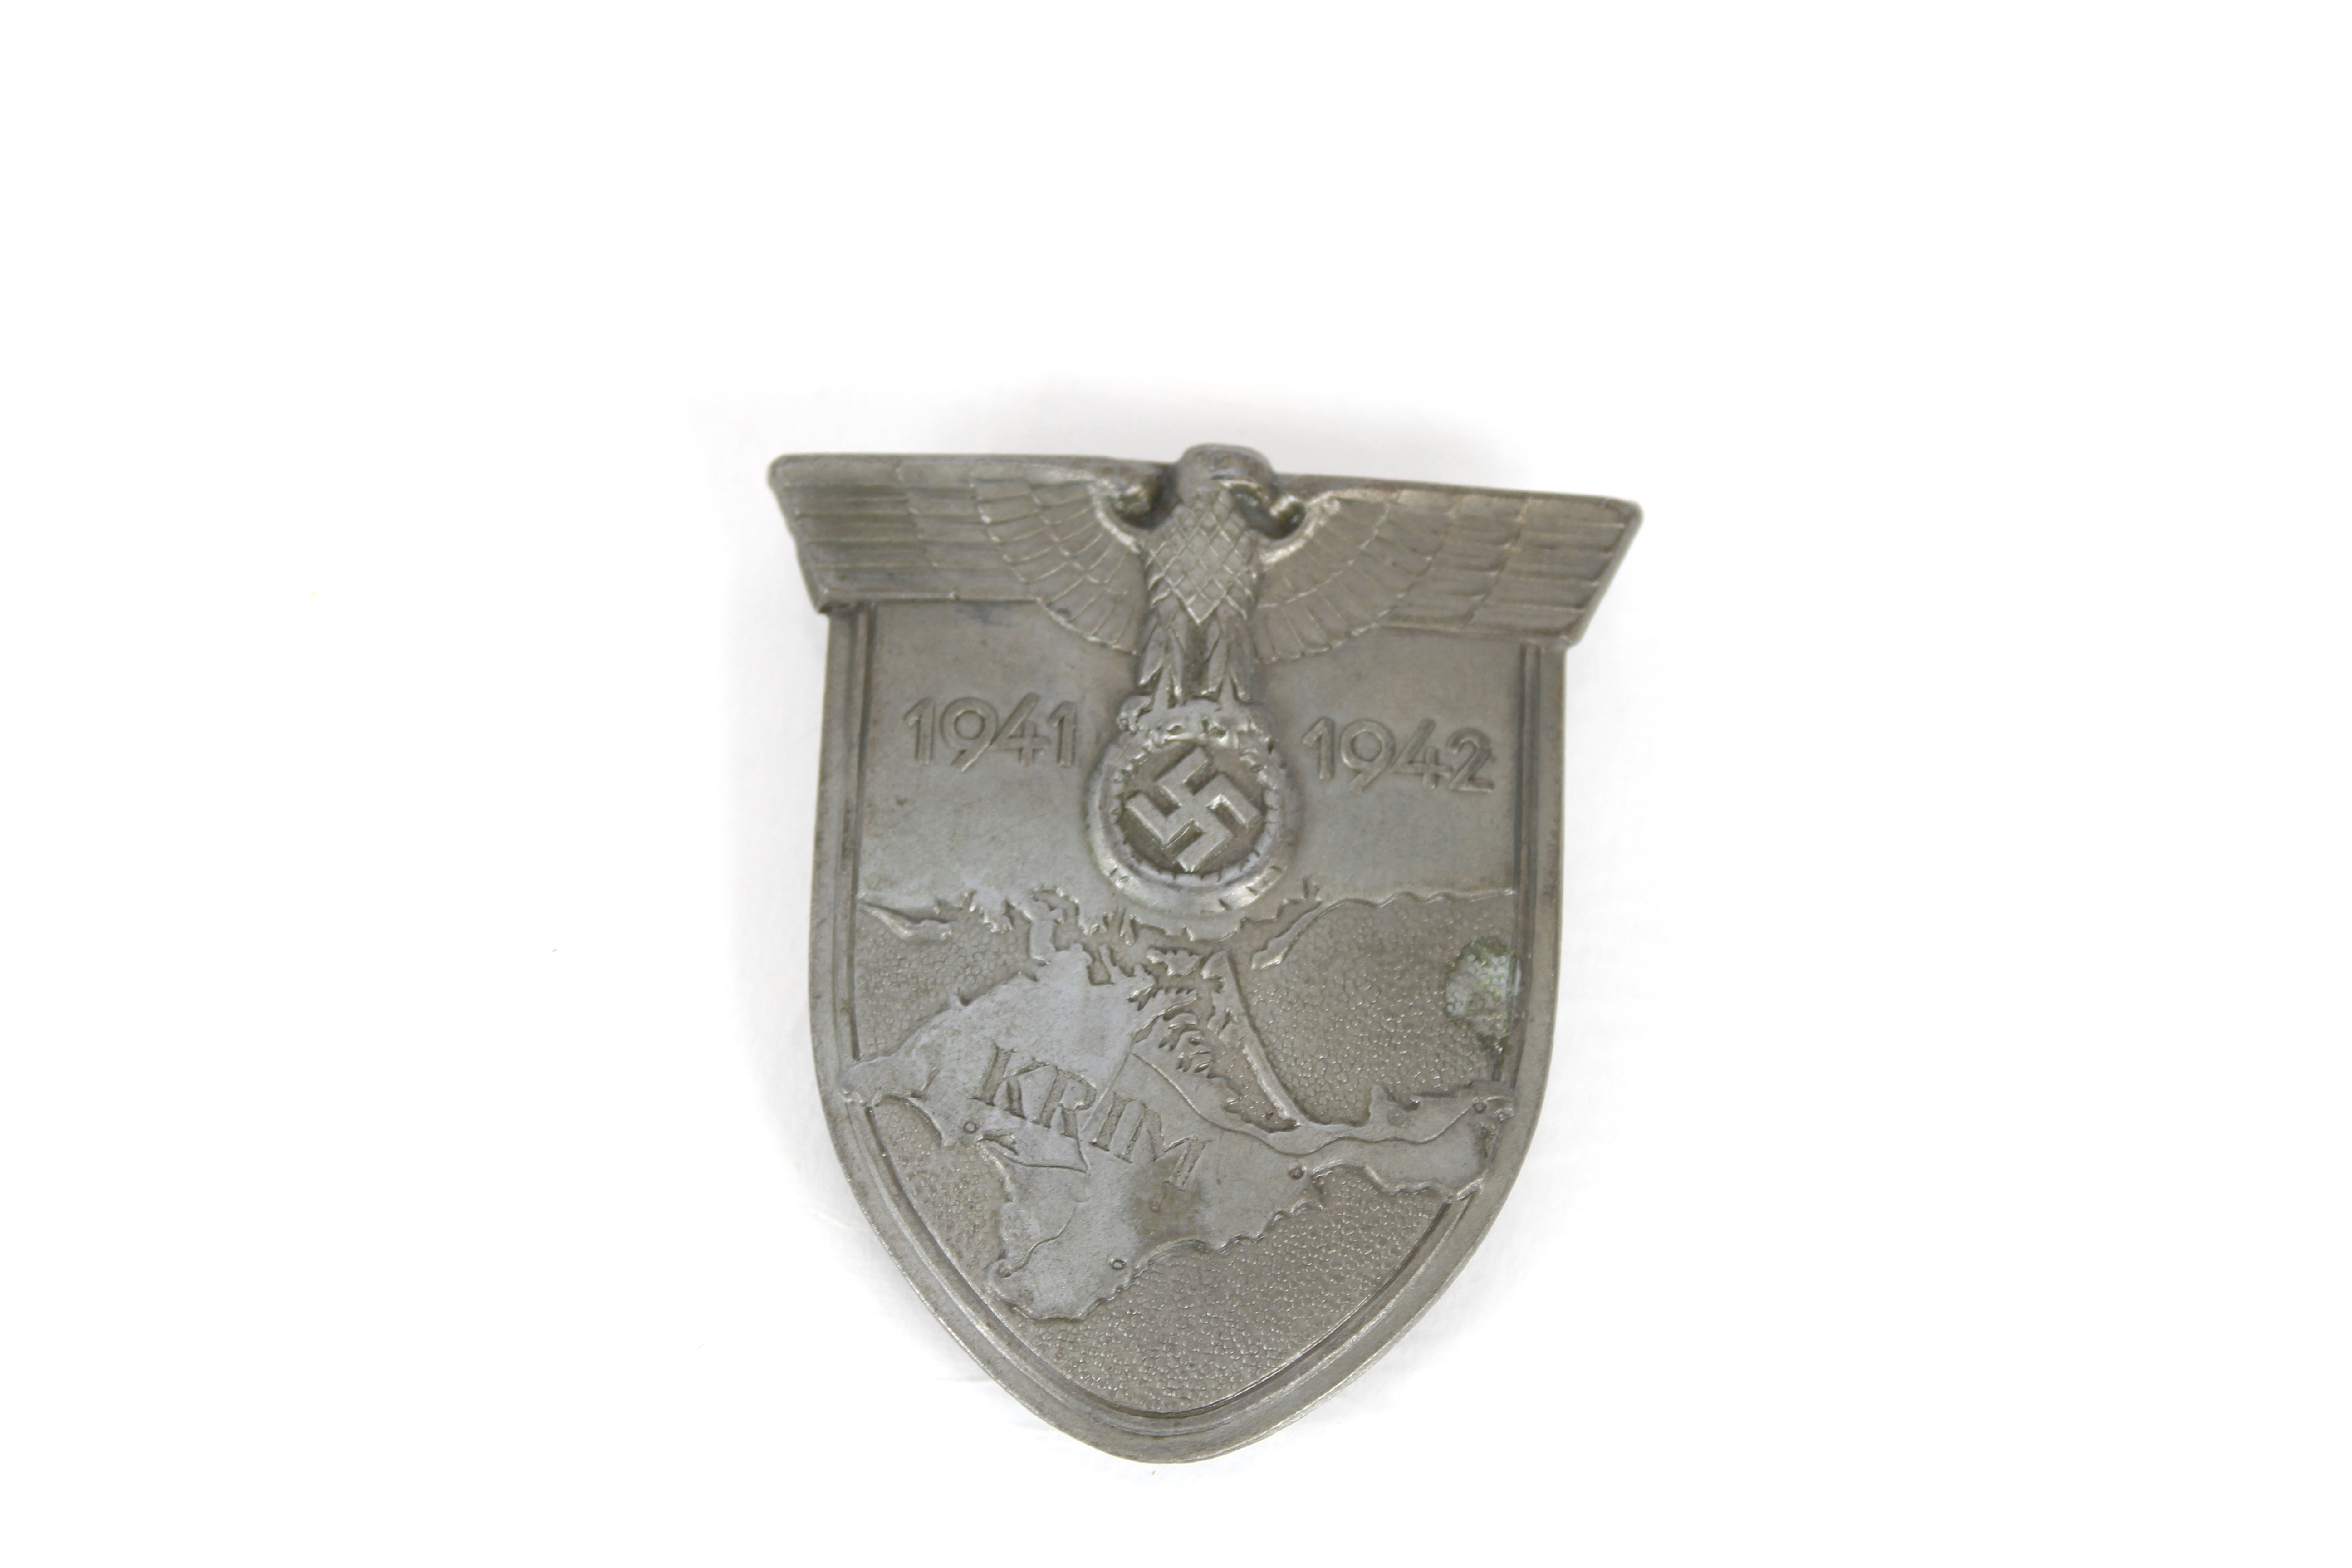 A Third Reich era Krim Shield